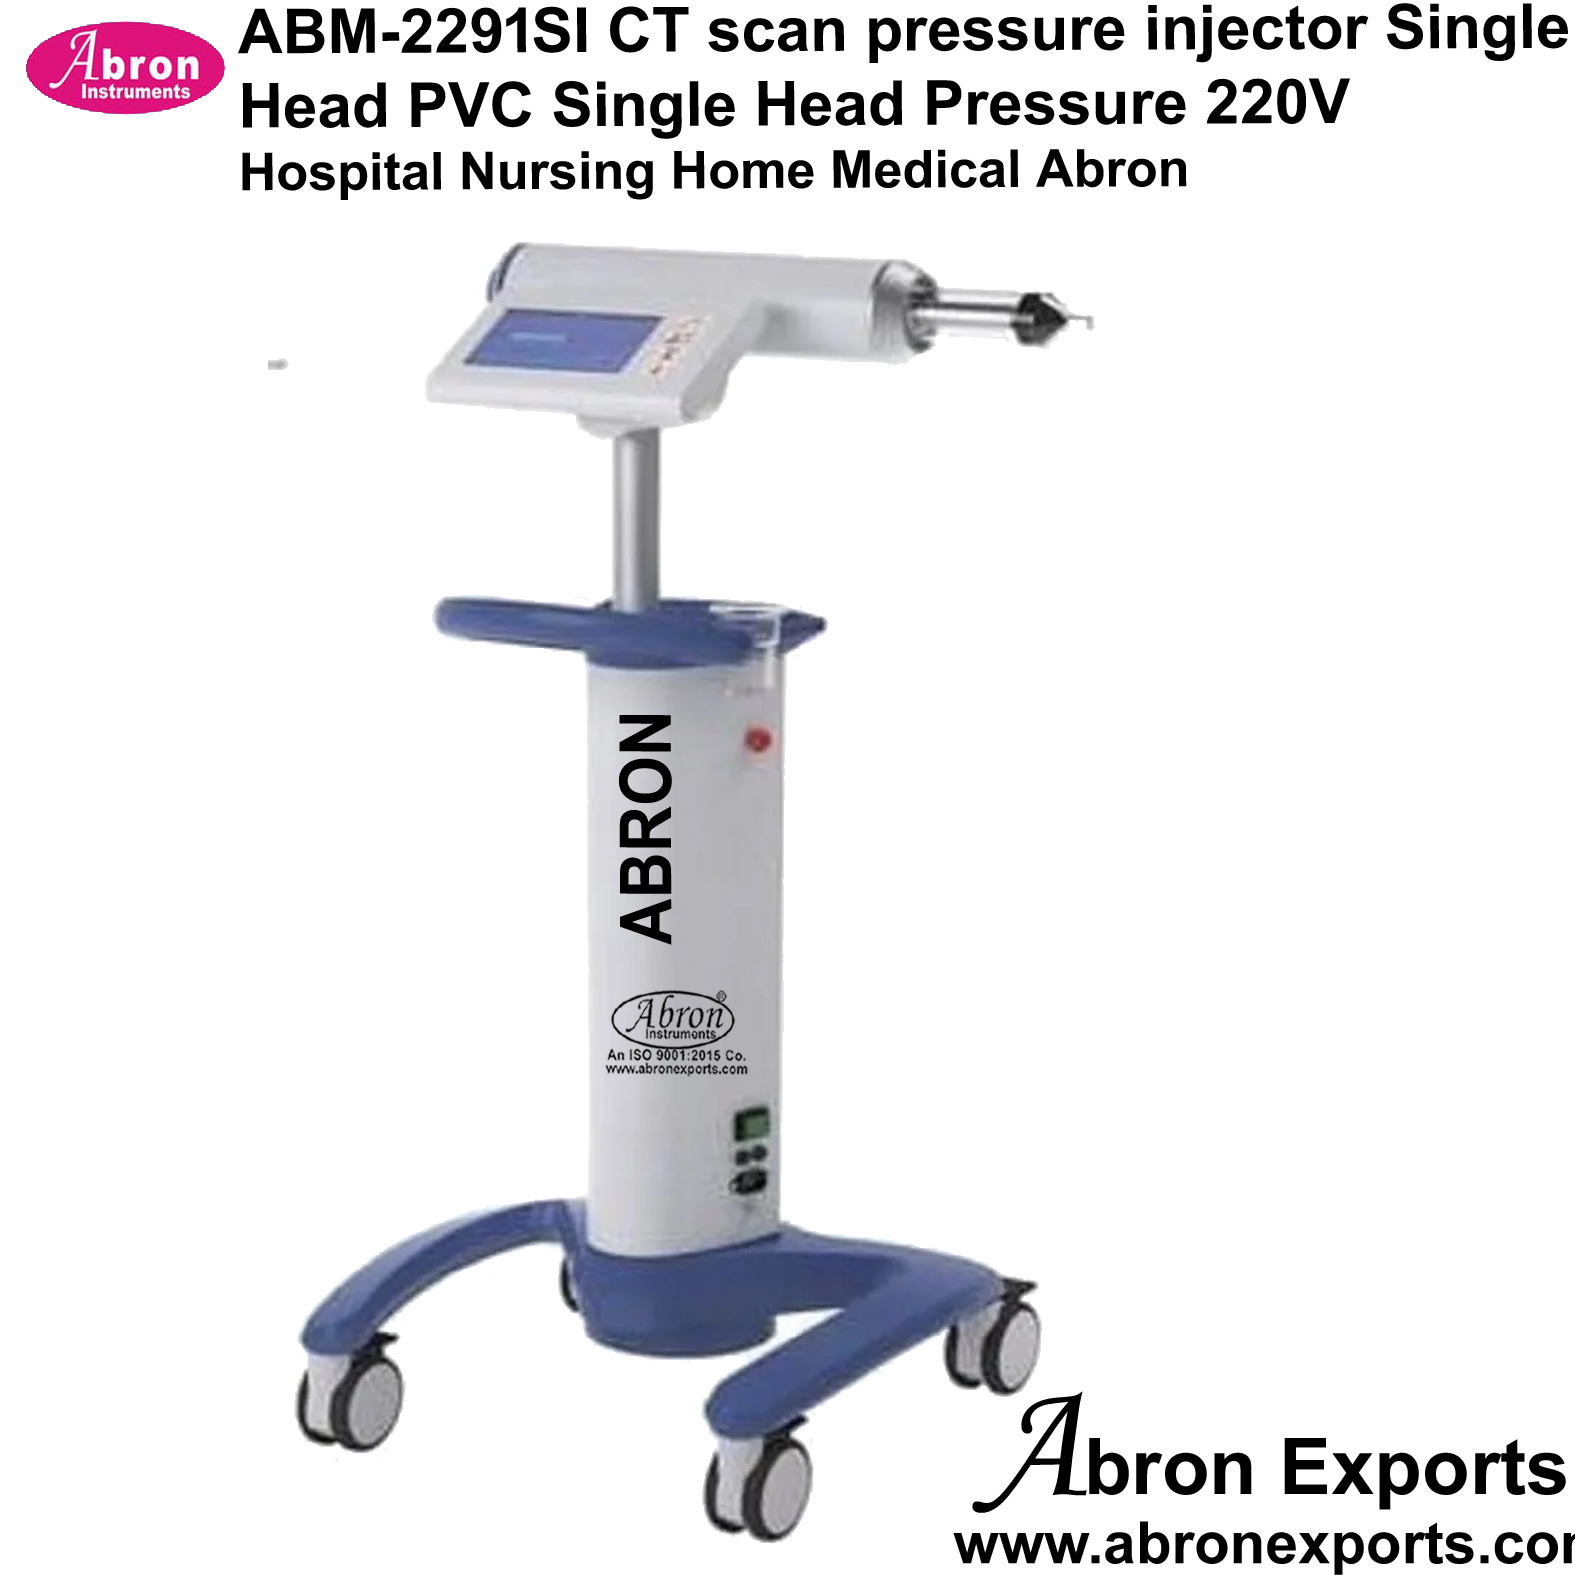 CT Scan Pressure Injector Single Head PVC Single Head Pressure 220V Hospital Nursing Home Medical Abron ABM-2291SI 